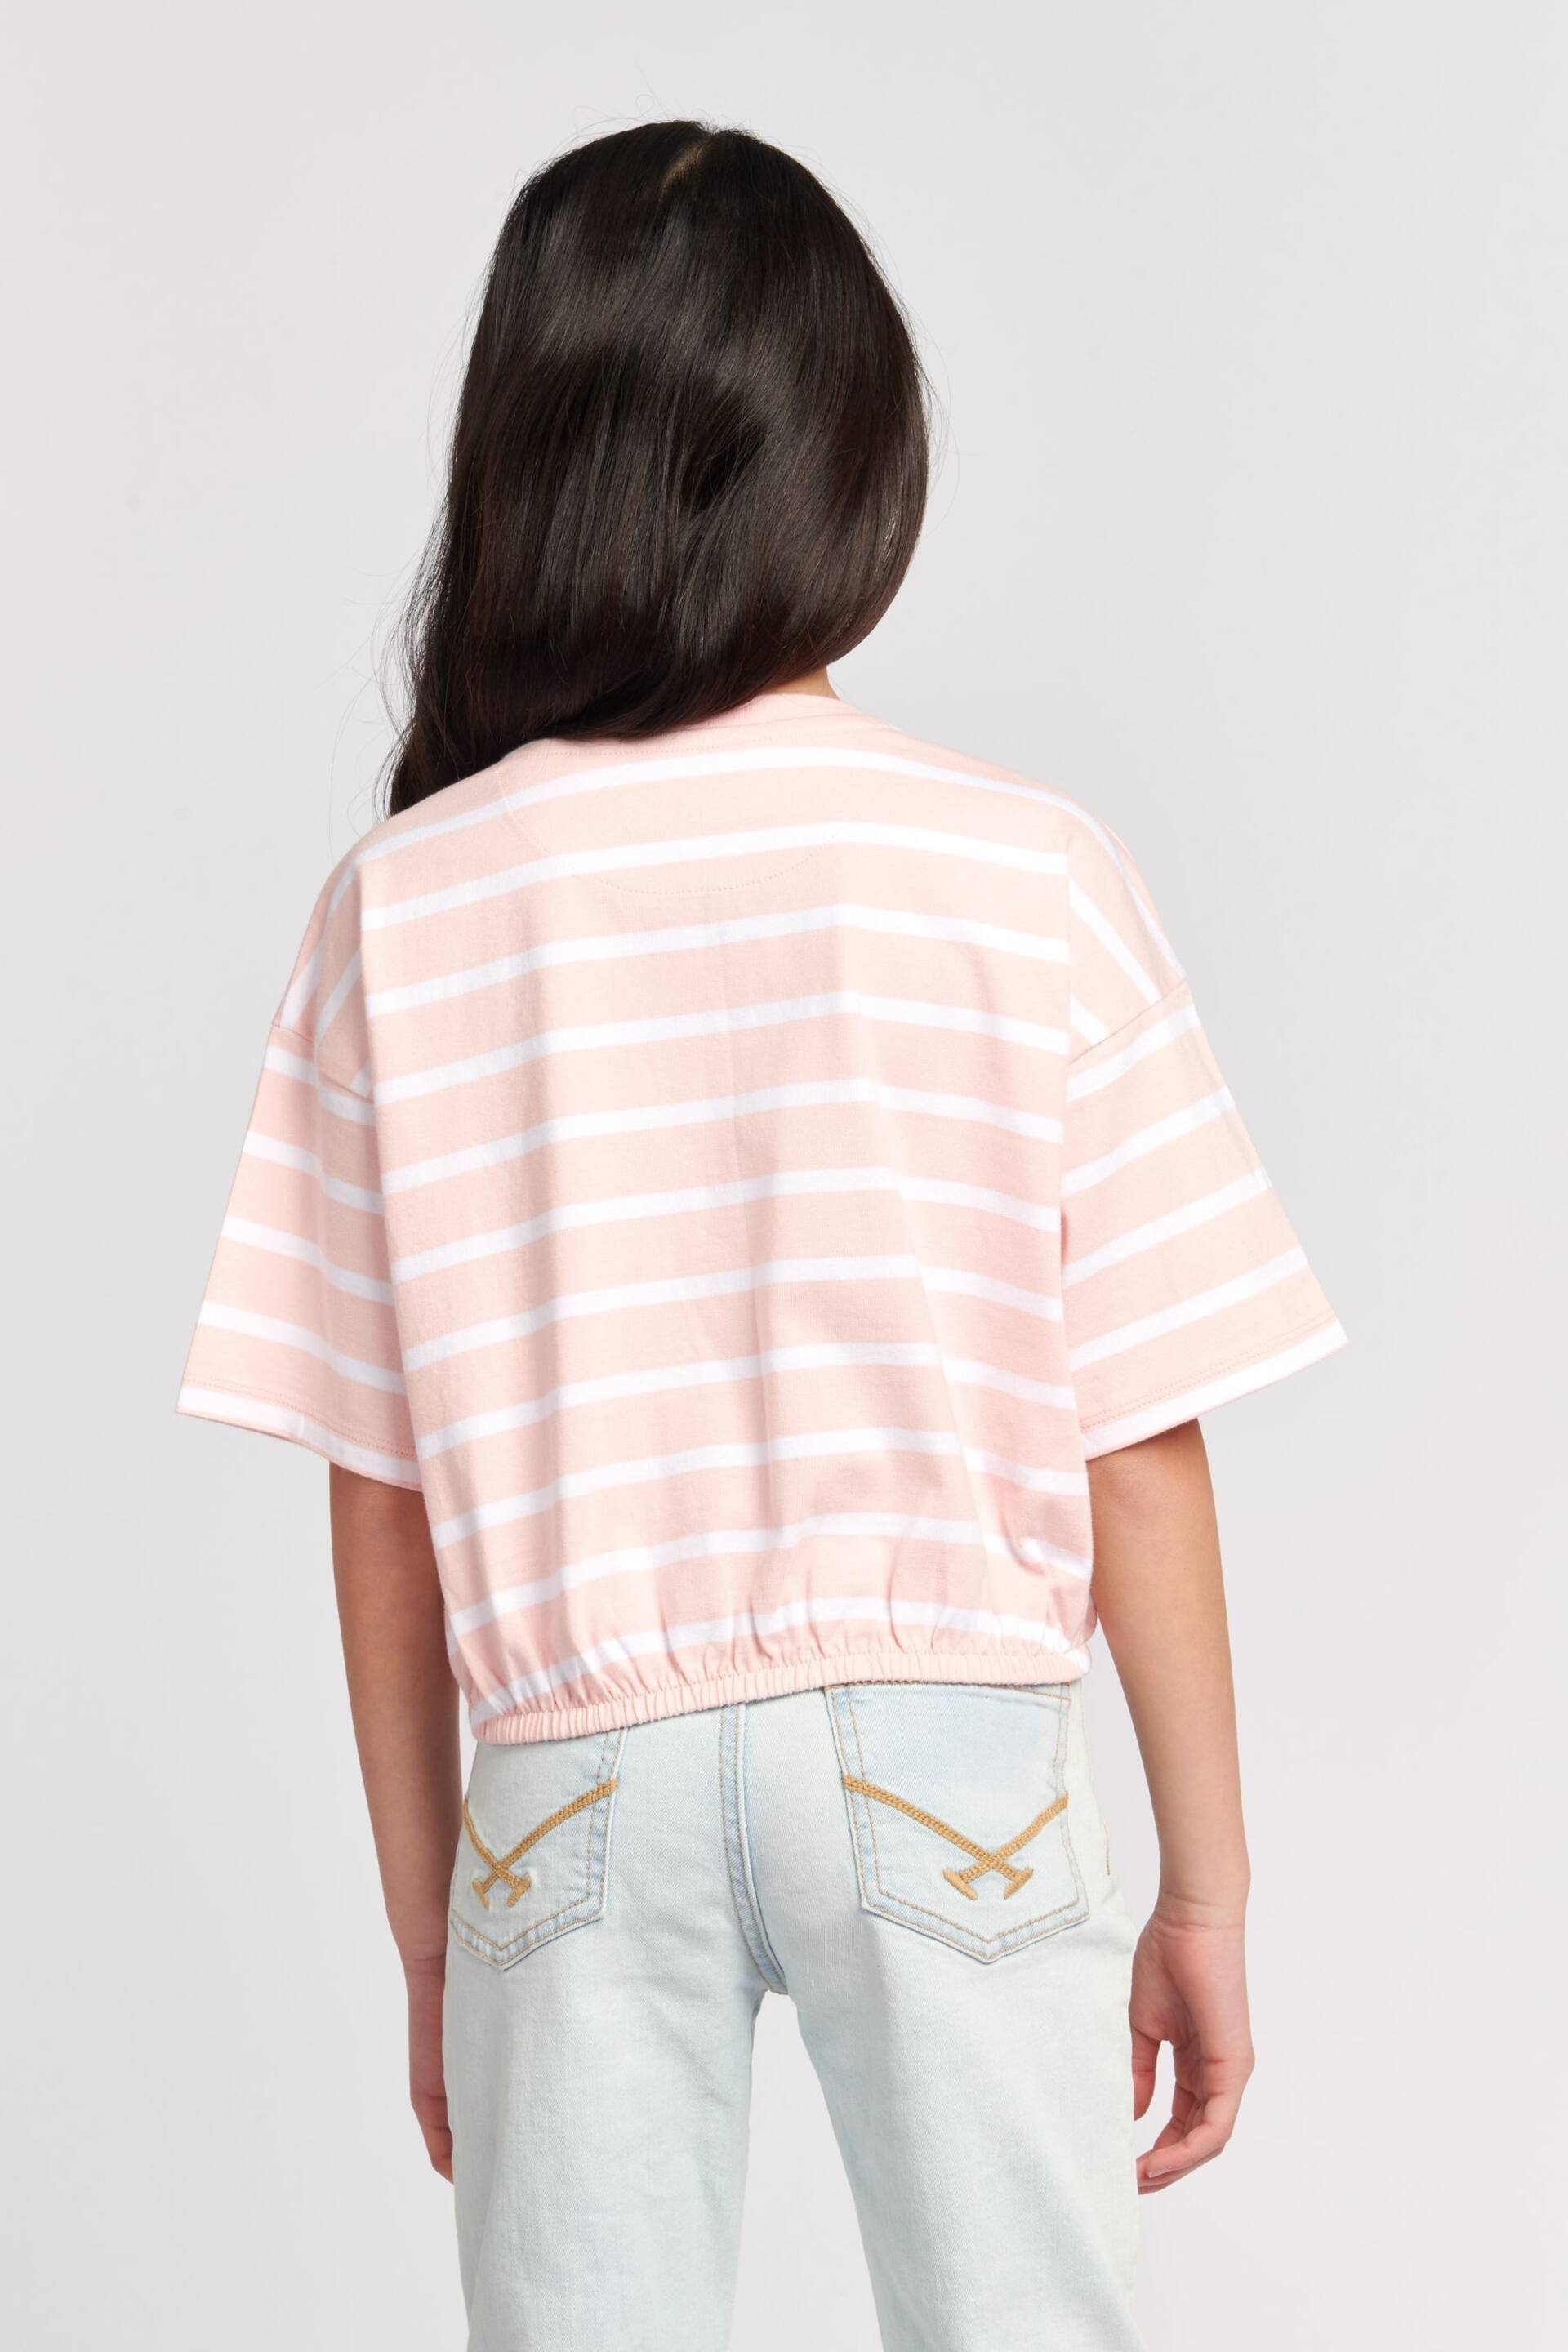 U.S. Polo Assn. Girls Pink Elastic Hem Striped T-Shirt - Image 3 of 6